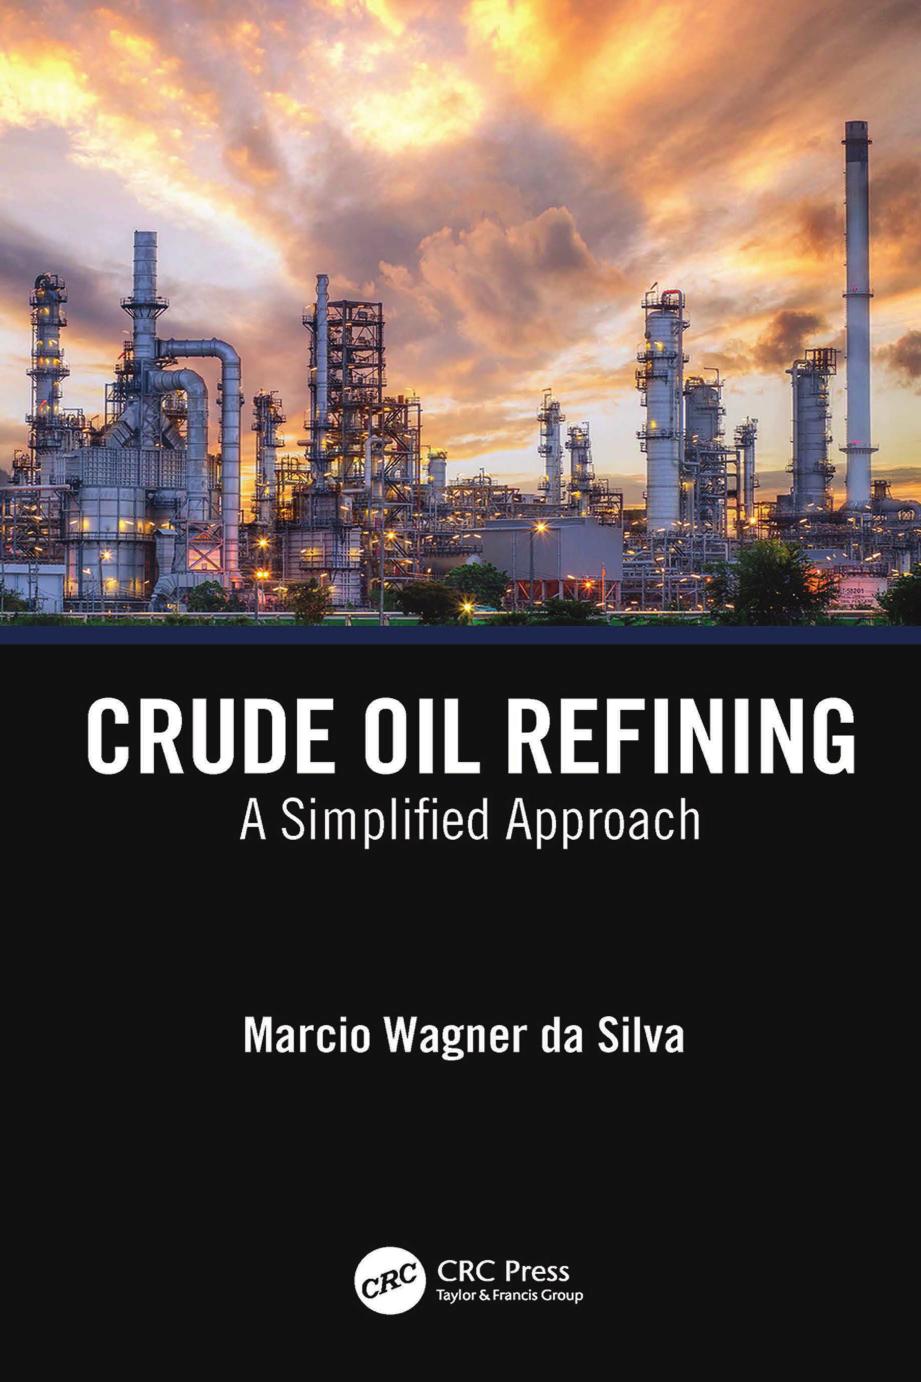 Crude Oil Refining: A Simplified Approach by Marcio Wagner da Silva